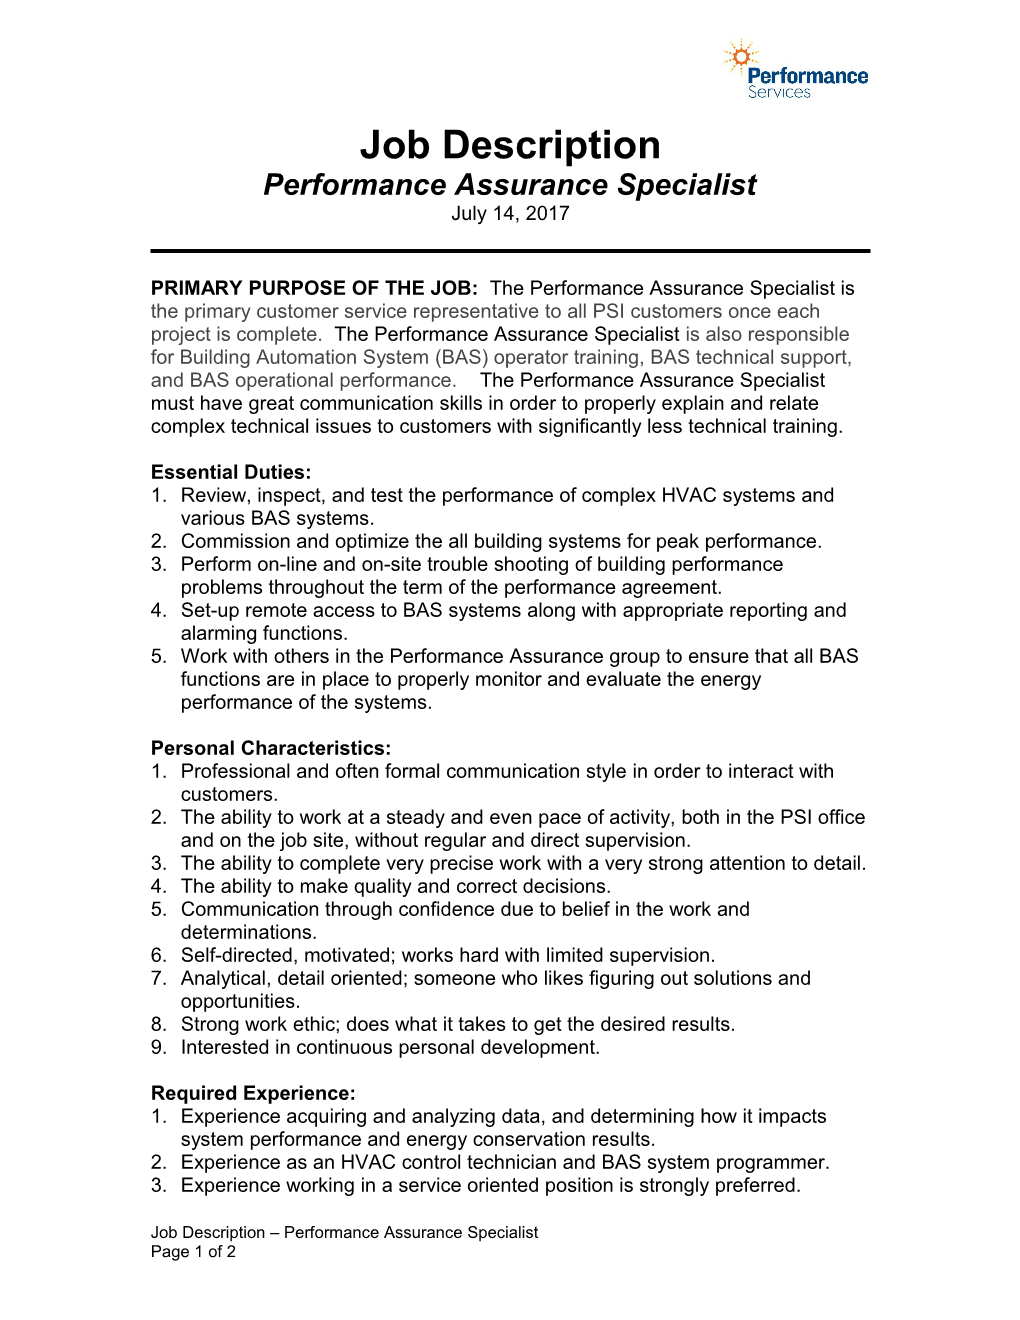 Performance Assurance Specialist